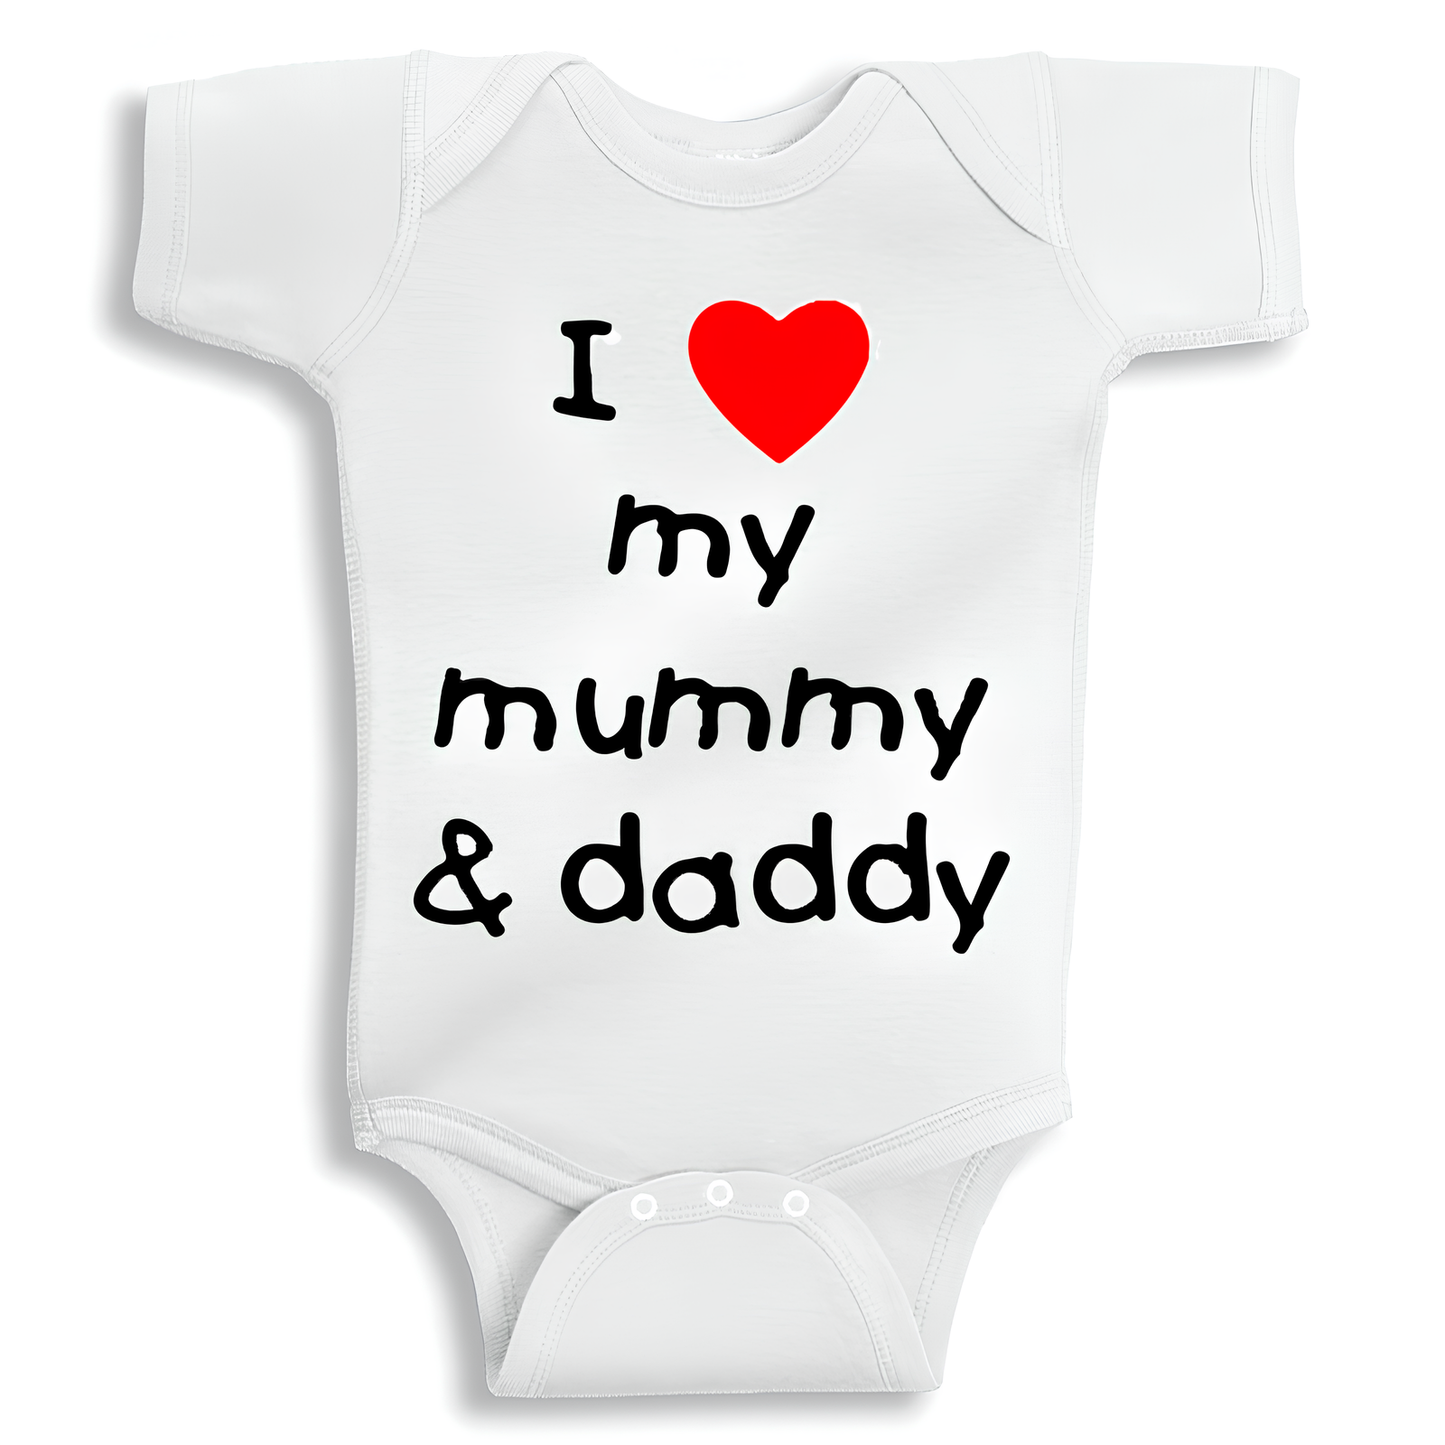 I love daddy and mummy Baby Onesie